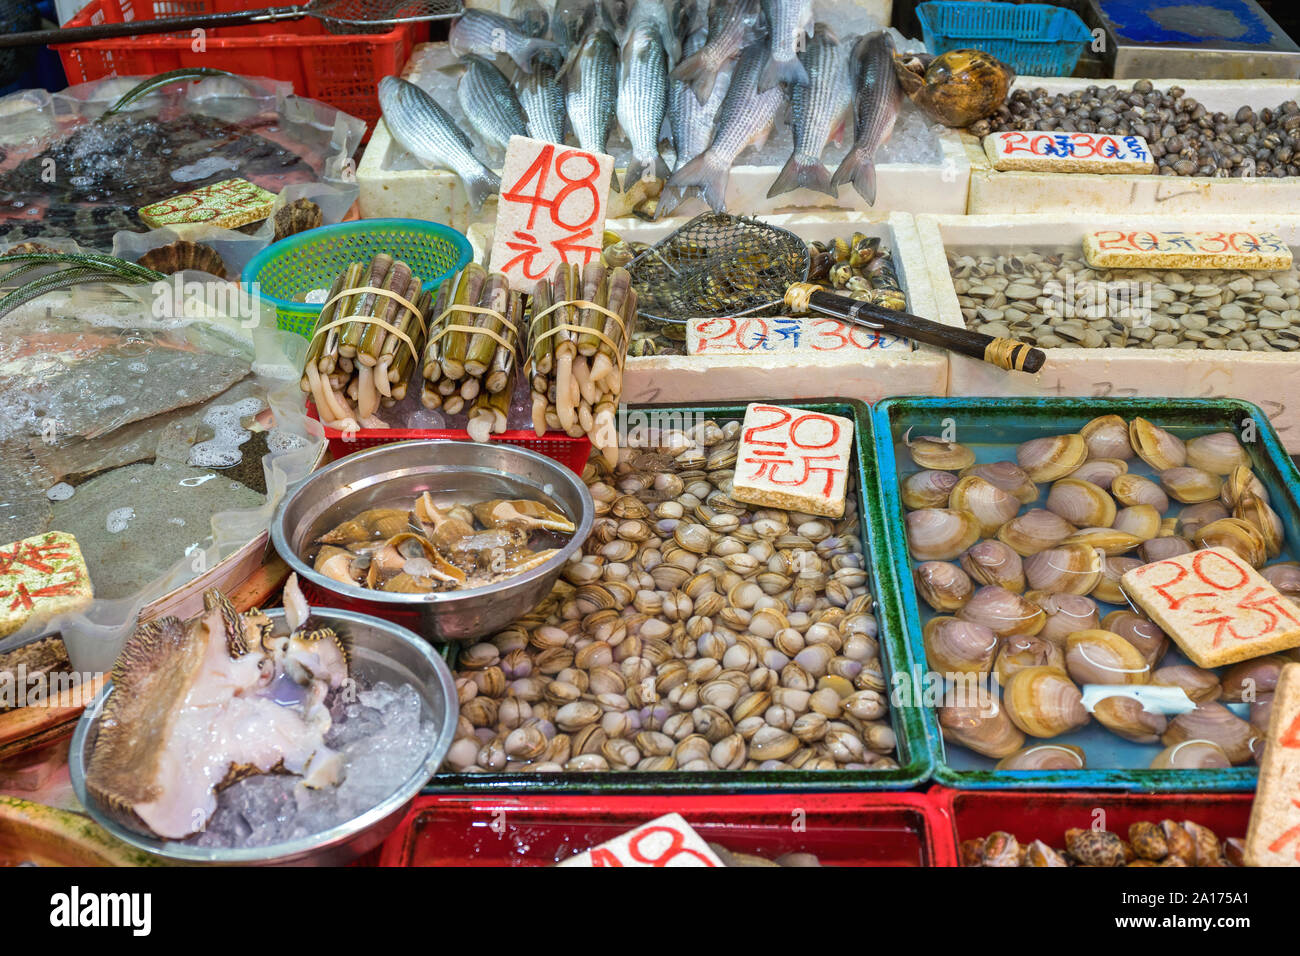 Frsh Live CLams Shells at Fish Market Stall Stock Photo